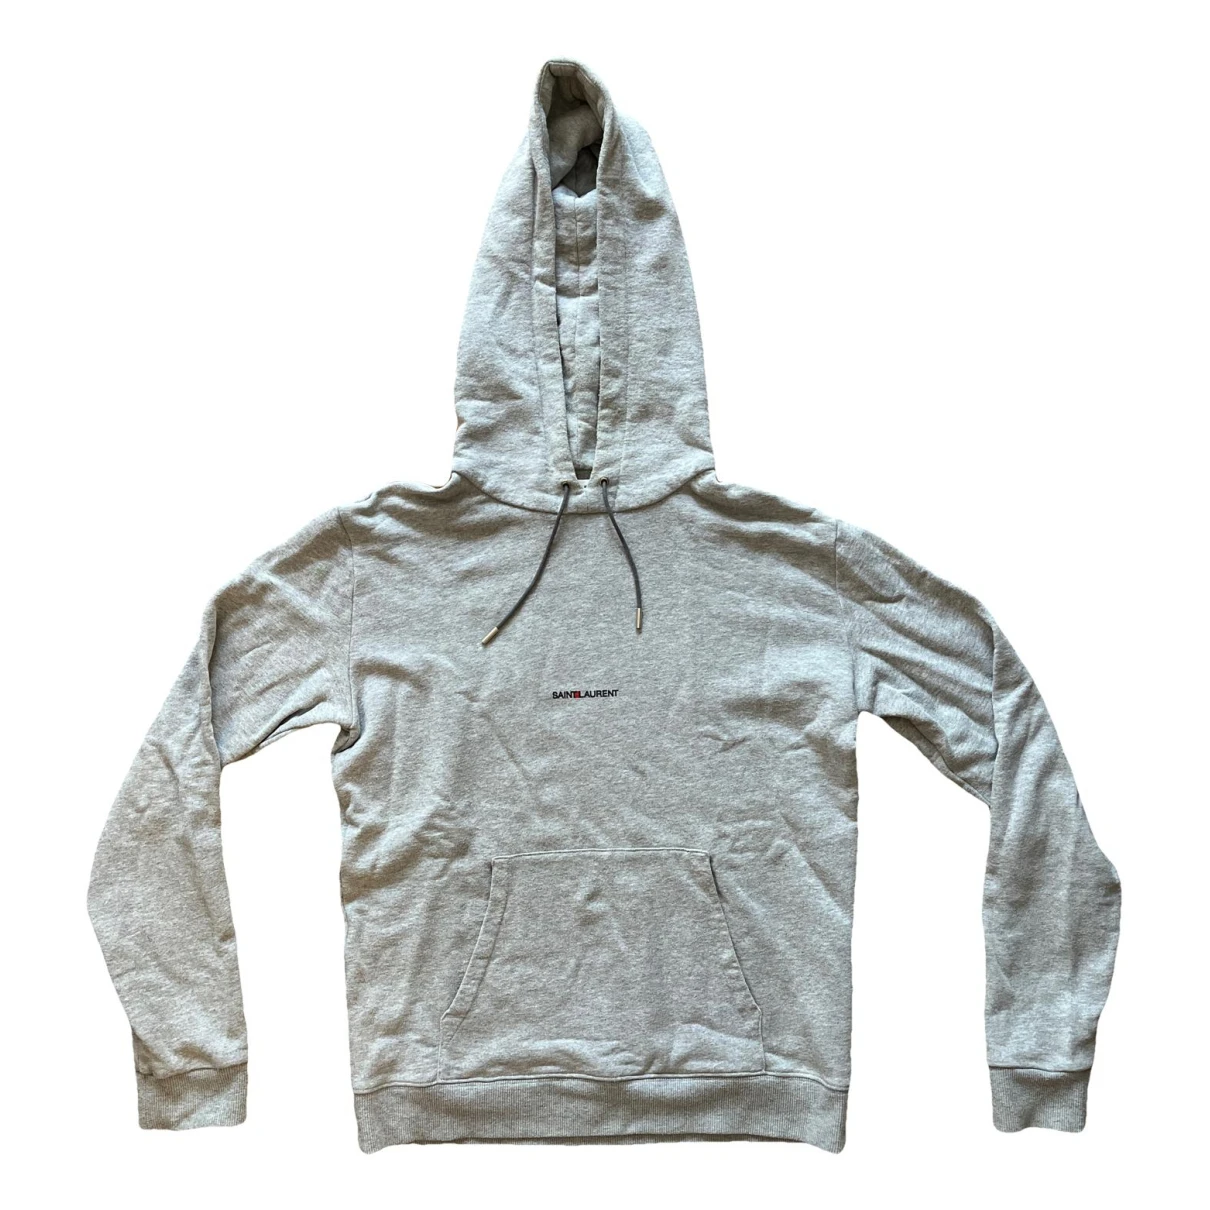 Pre-owned Saint Laurent Sweatshirt In Grey